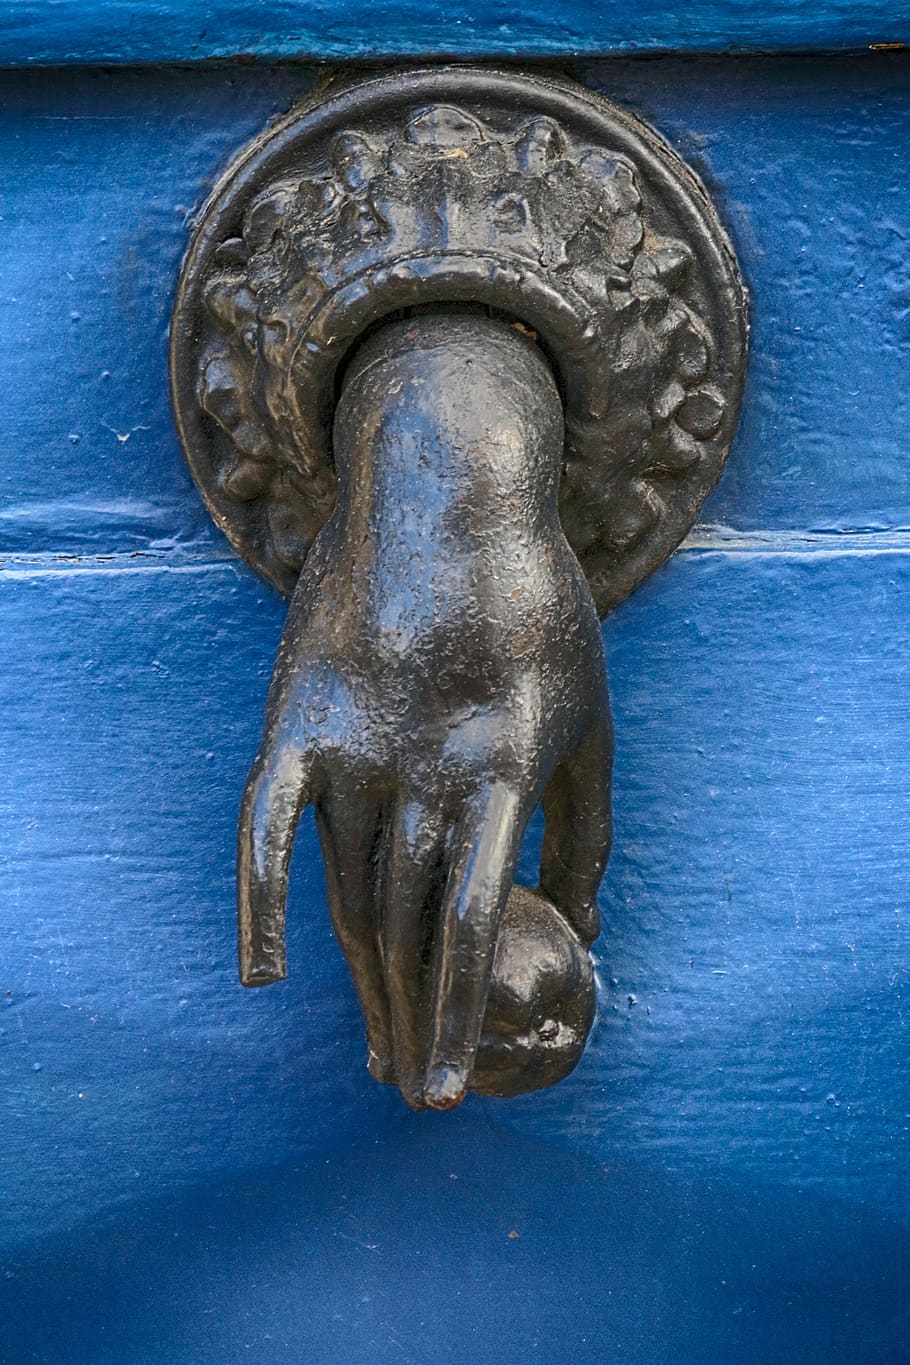 knocker, door, hand, woman, apple, metal, blue, vintage, old, architecture